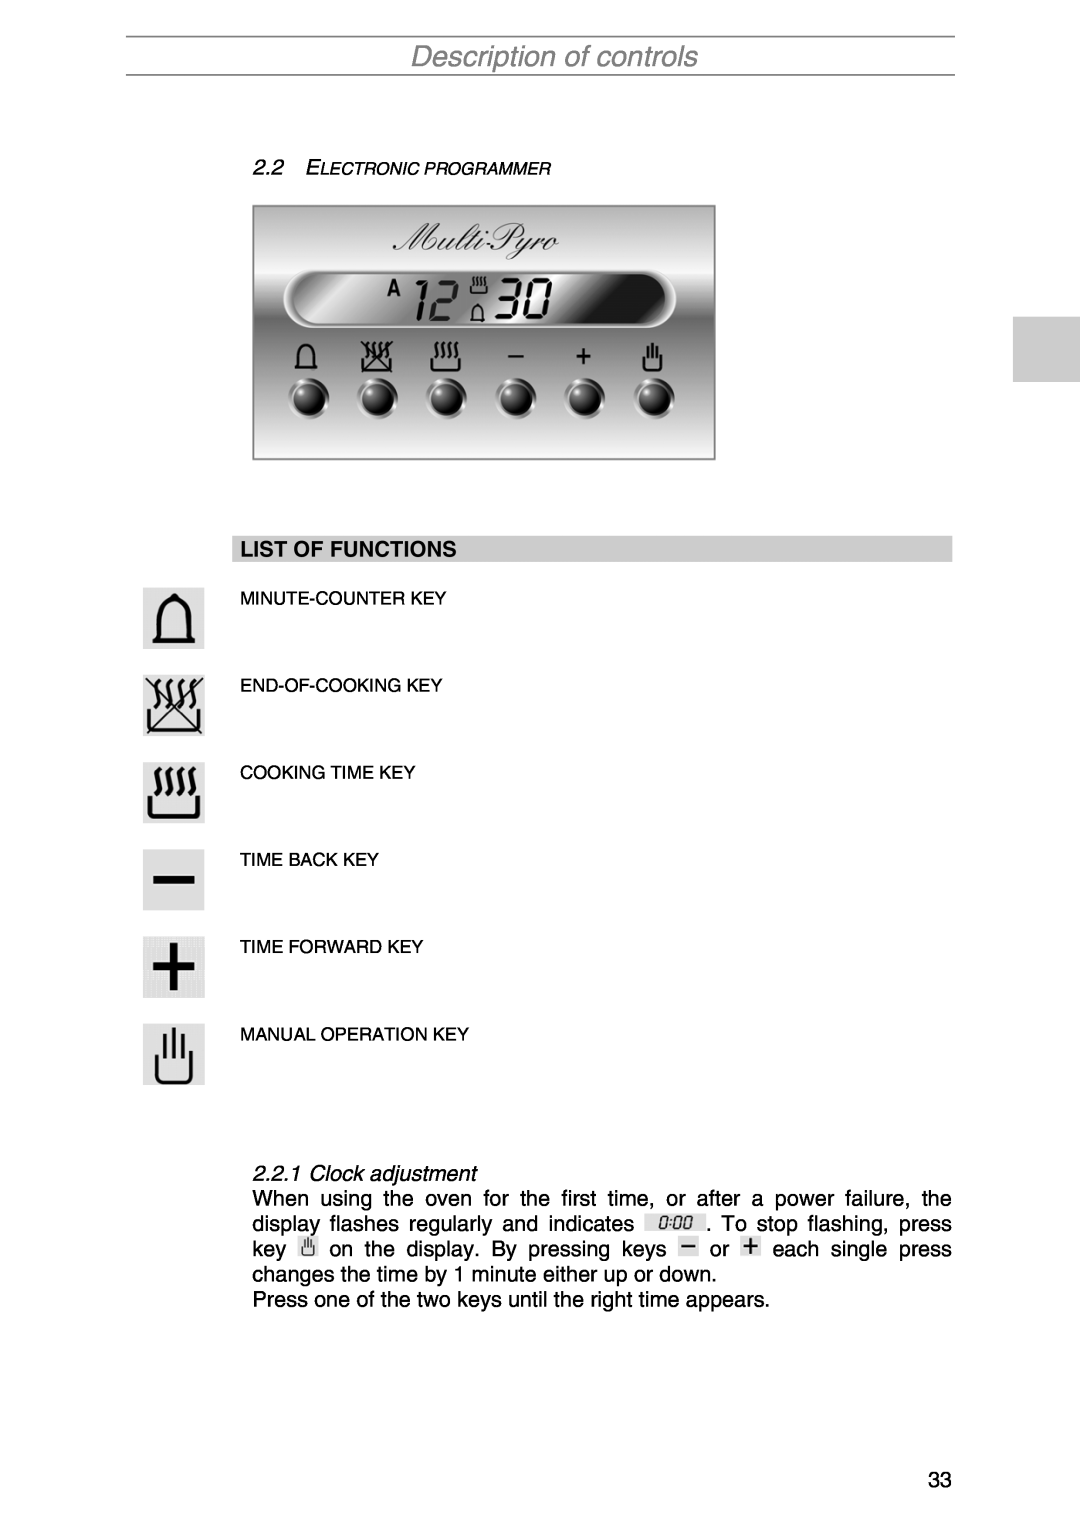 Smeg PIRO10NE manual List Of Functions, Description of controls, Clock adjustment 